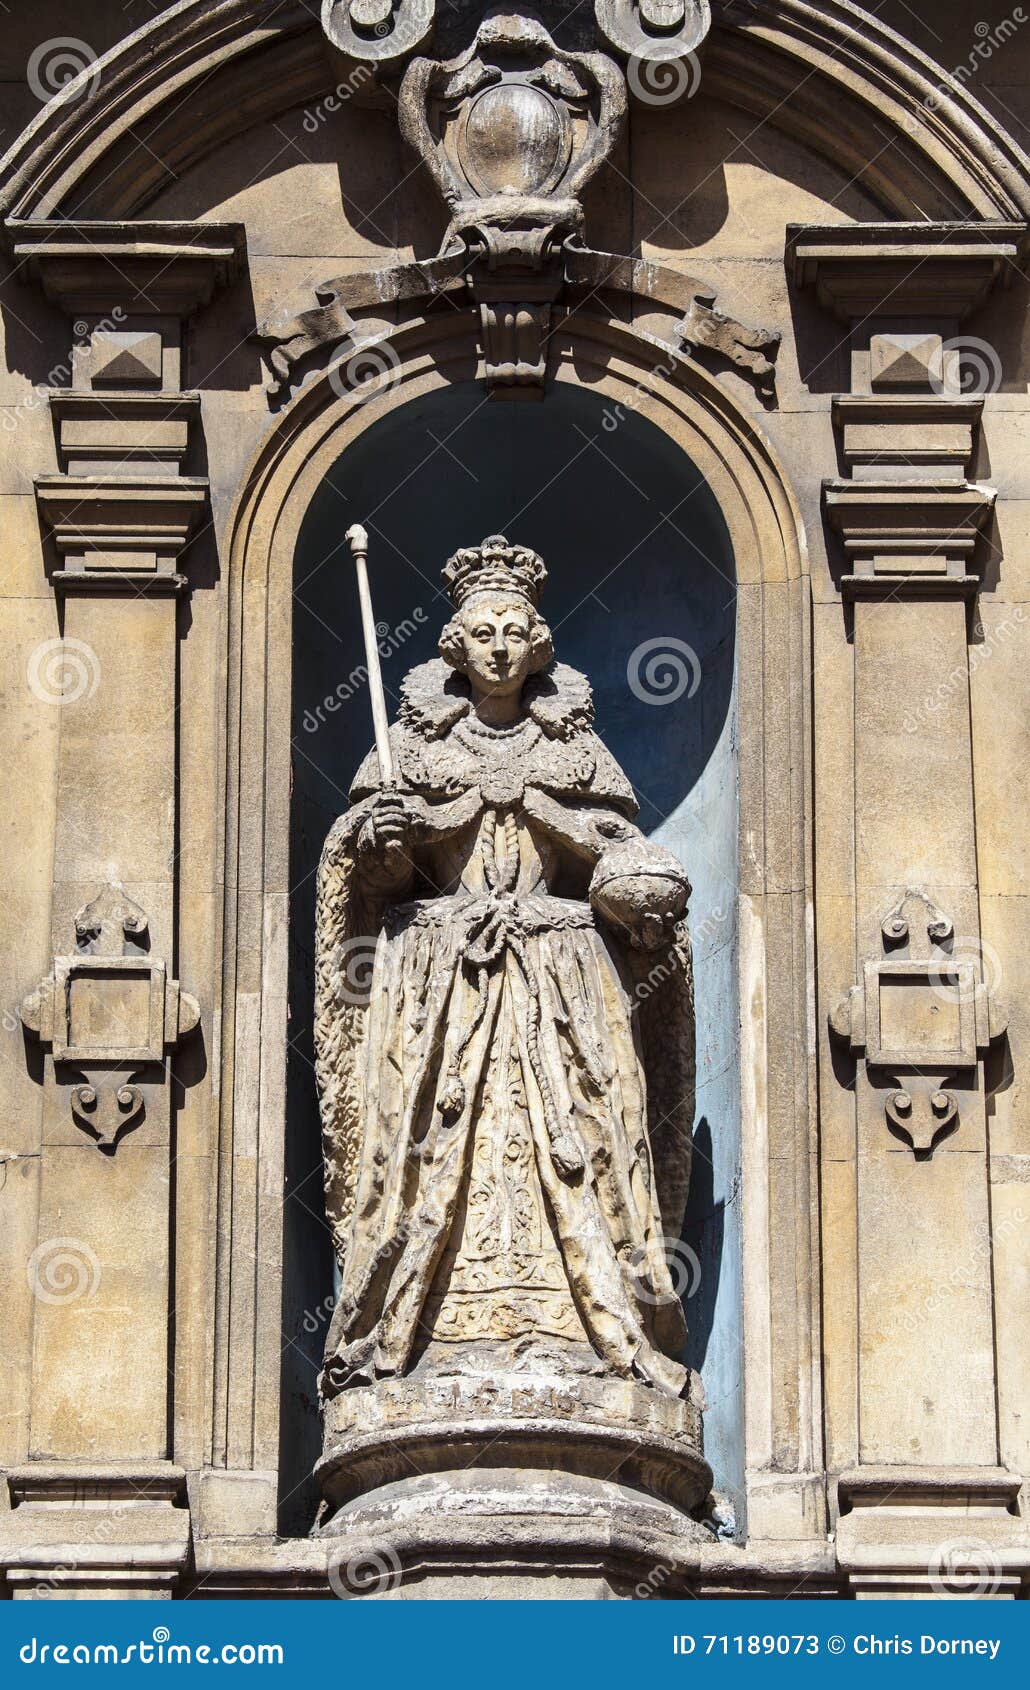 Queen Elizabeth I Statue in London Stock Image Image of london